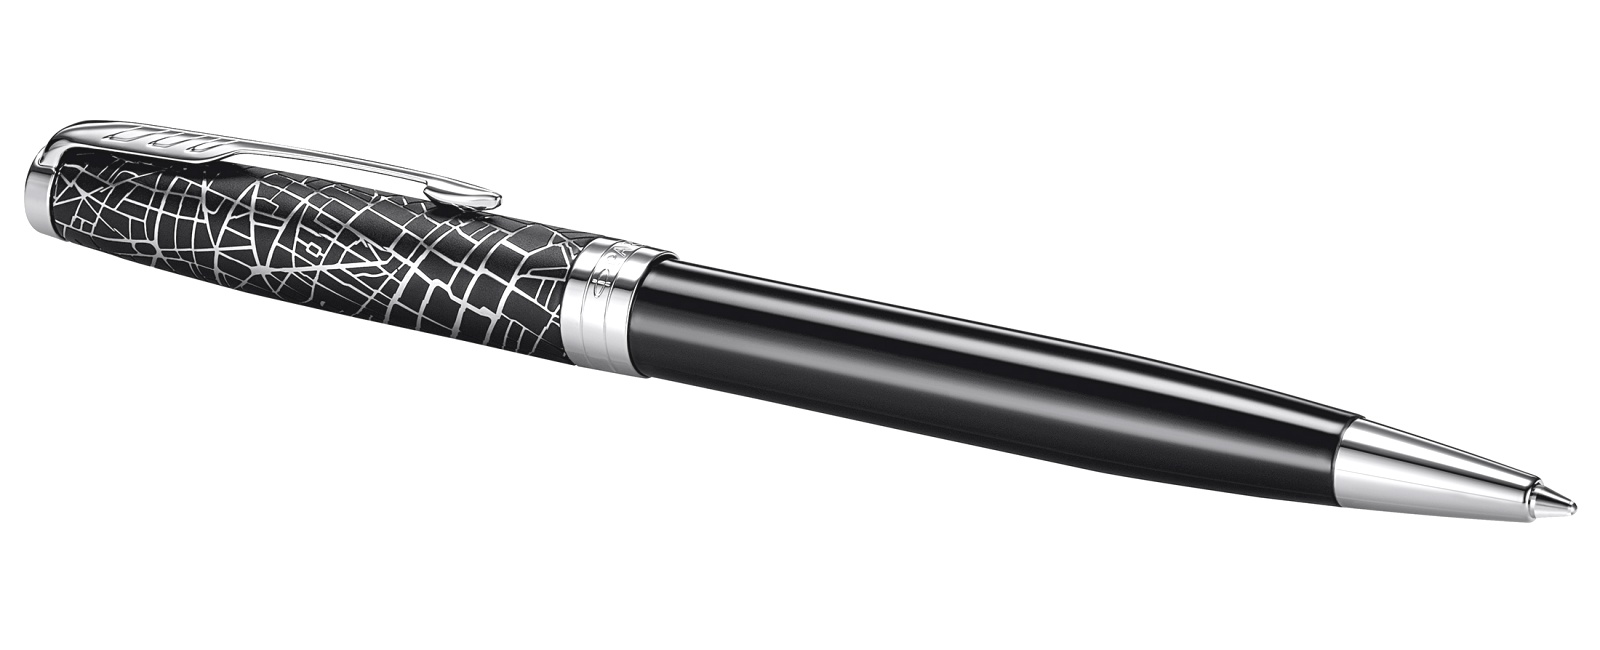  Ручка шариковая Parker Sonnet Metro SE18 K541, Black CT, фото 2